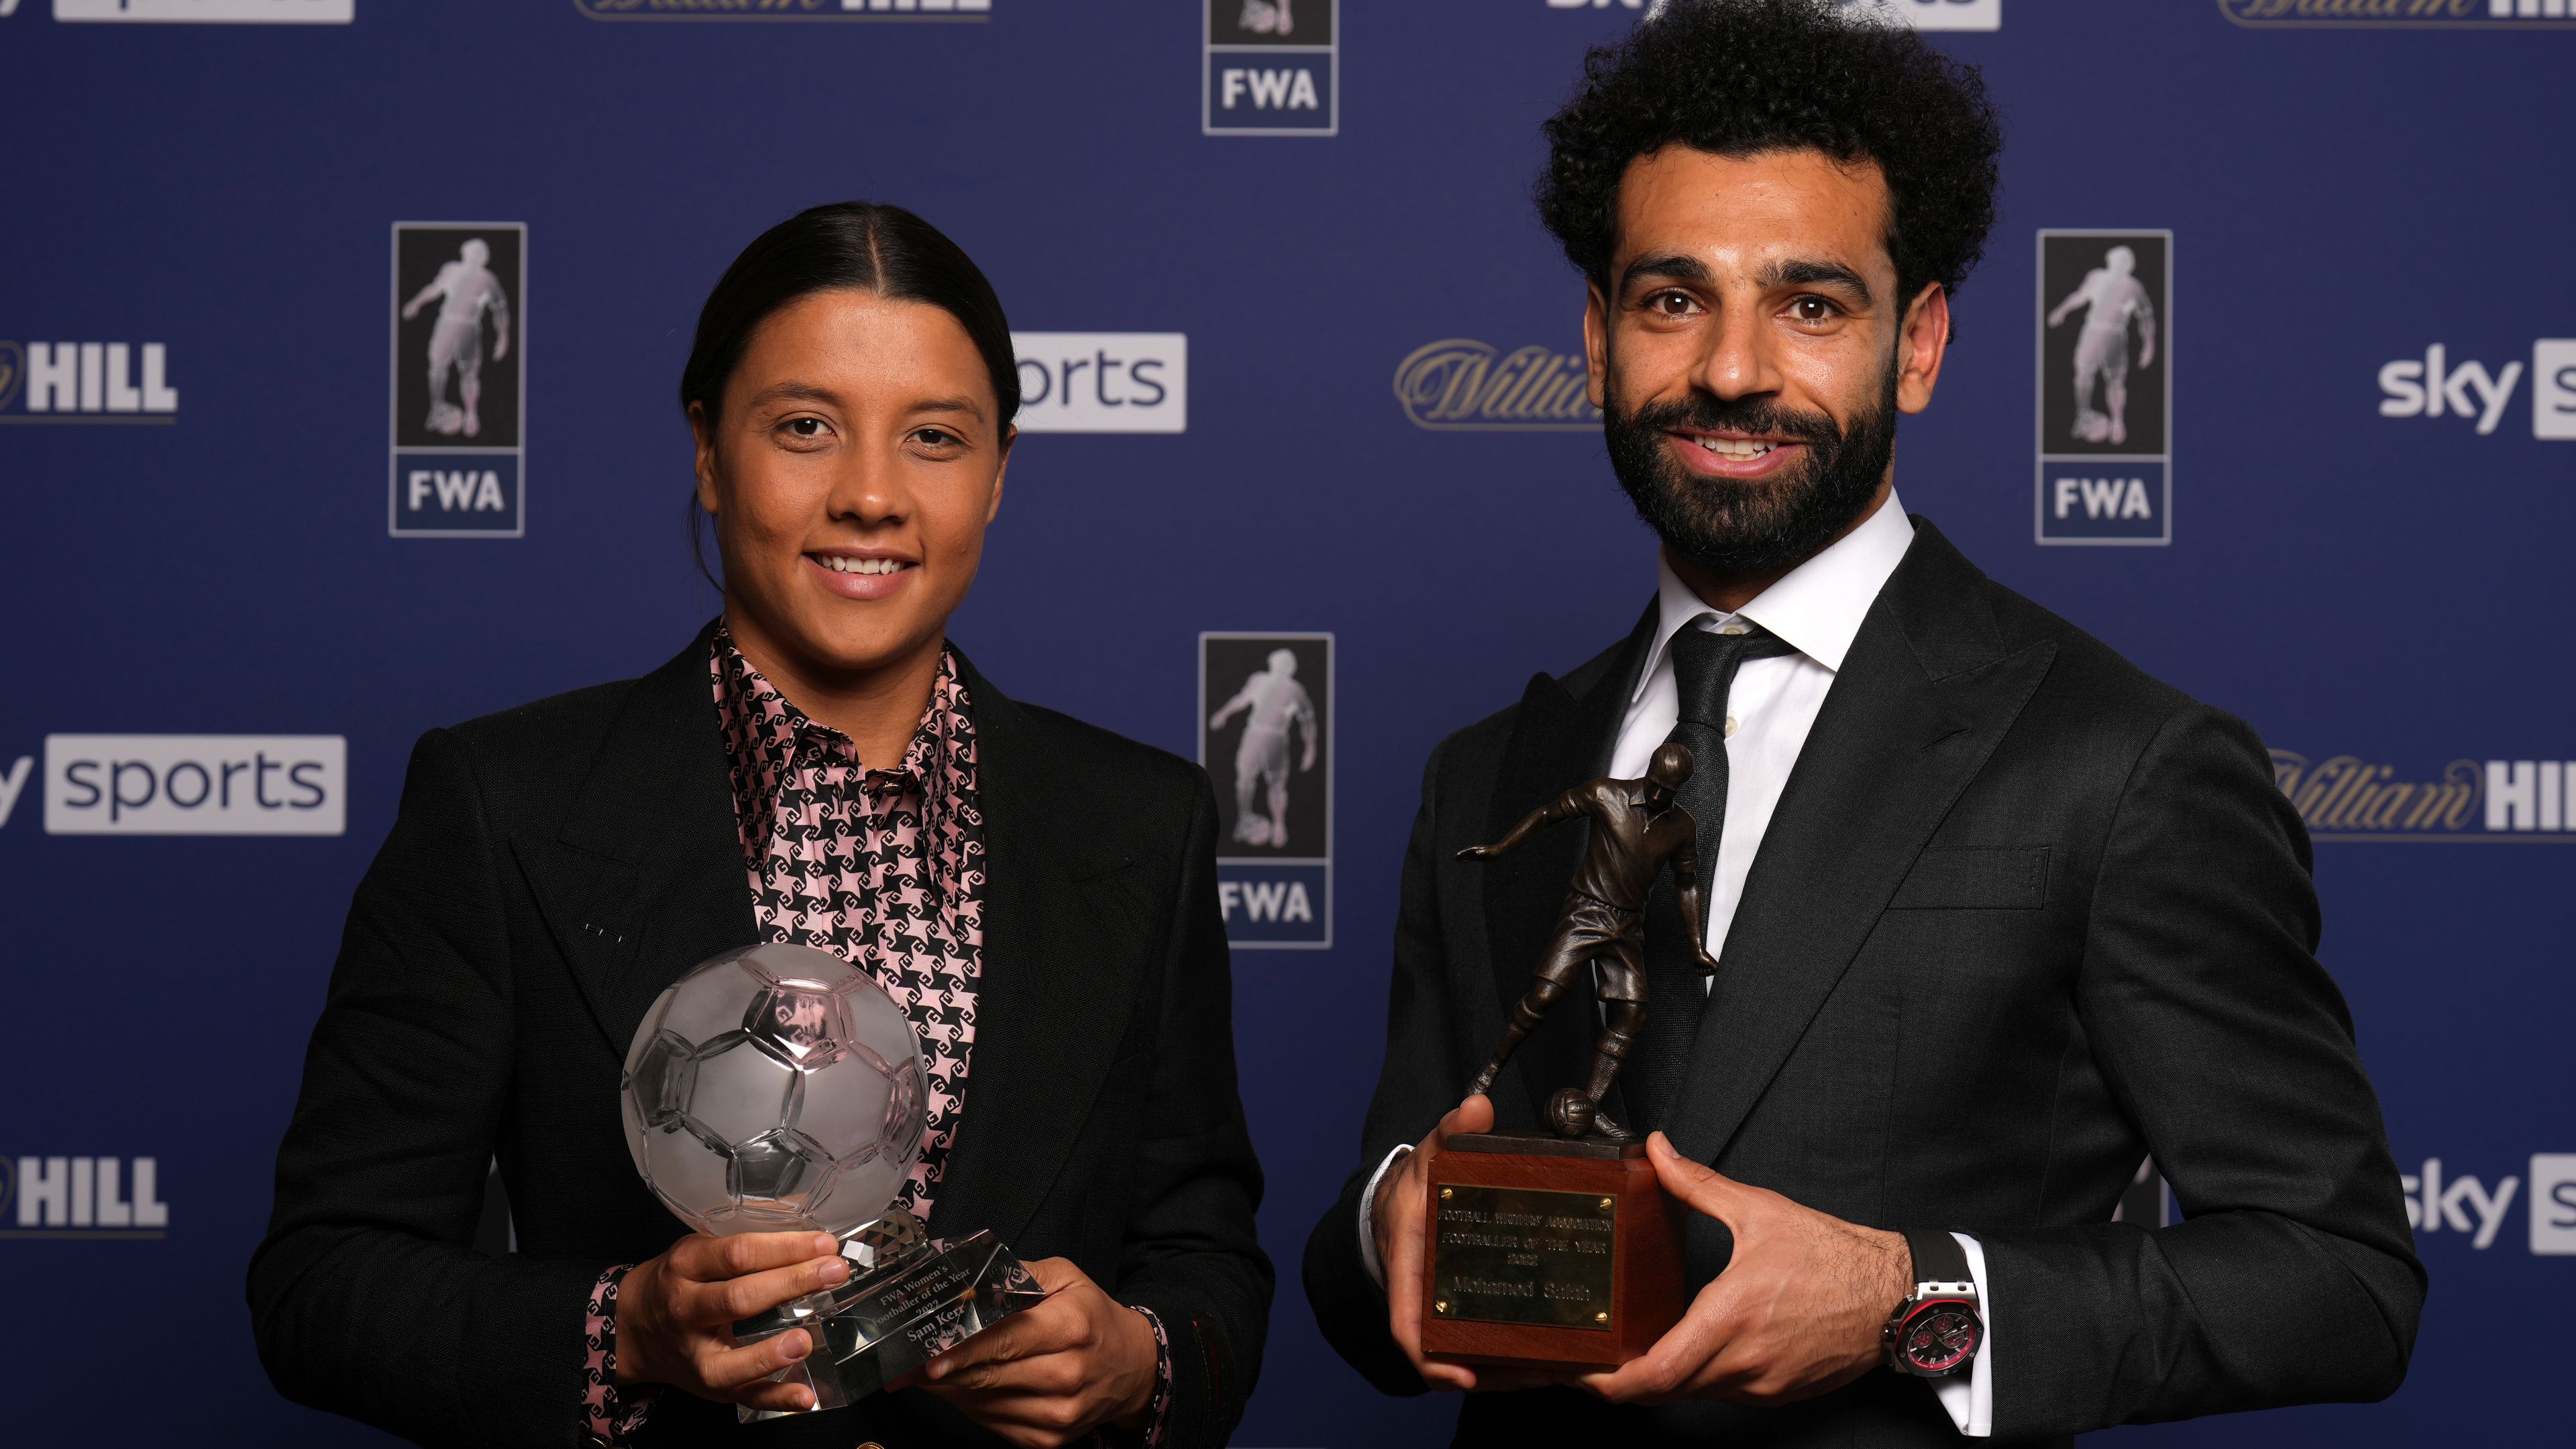 Sam Kerr photo with Mo Salah cements her football superstardom after winning prestigious award